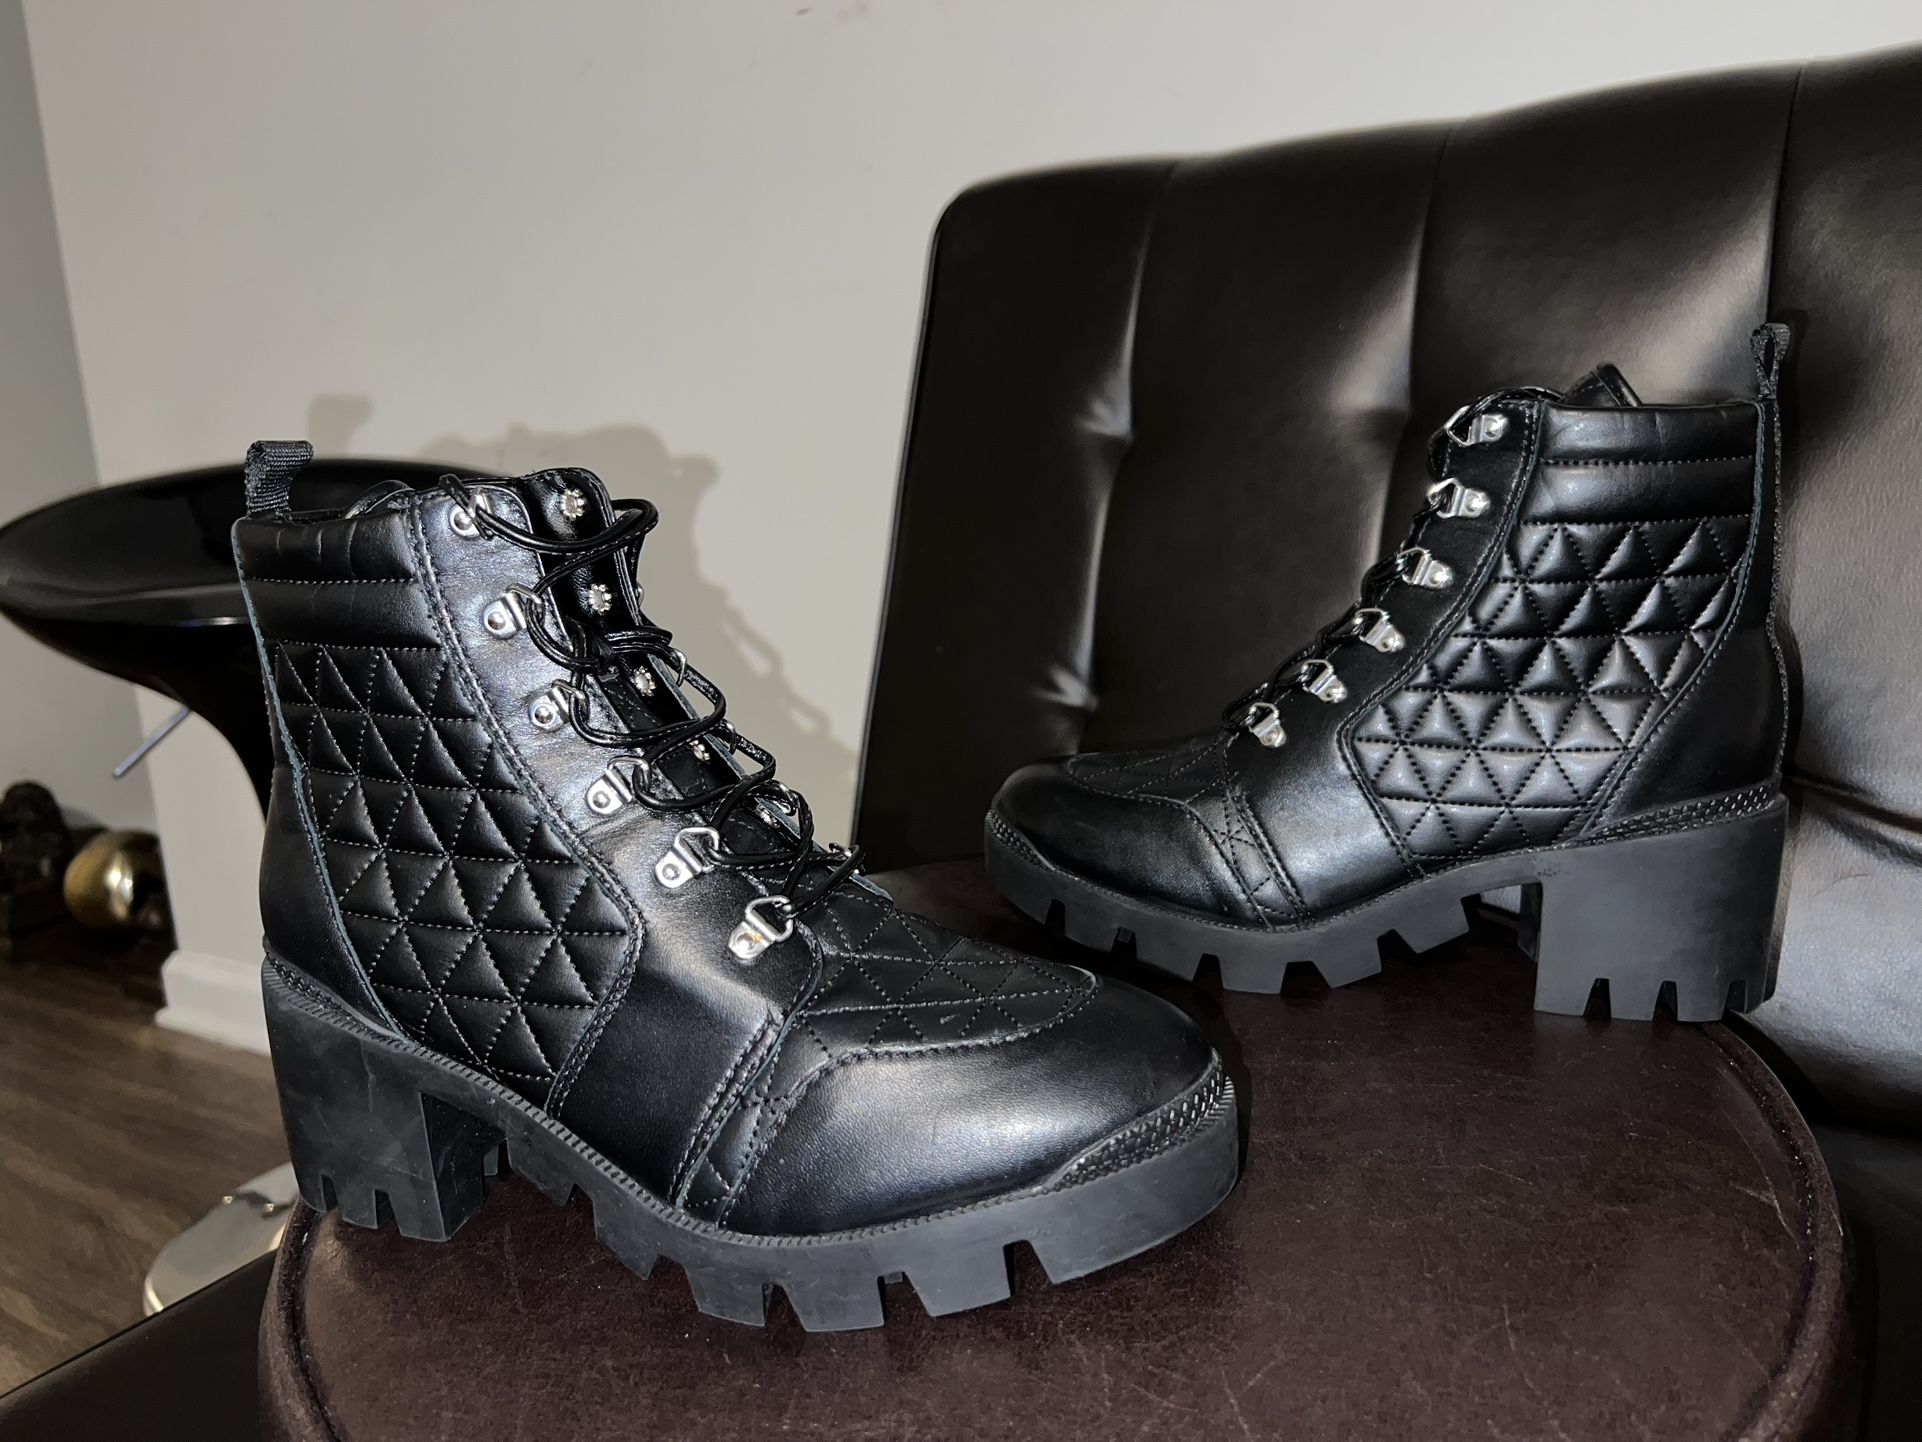 SCHUTZ moto ankle boots size 8.5B